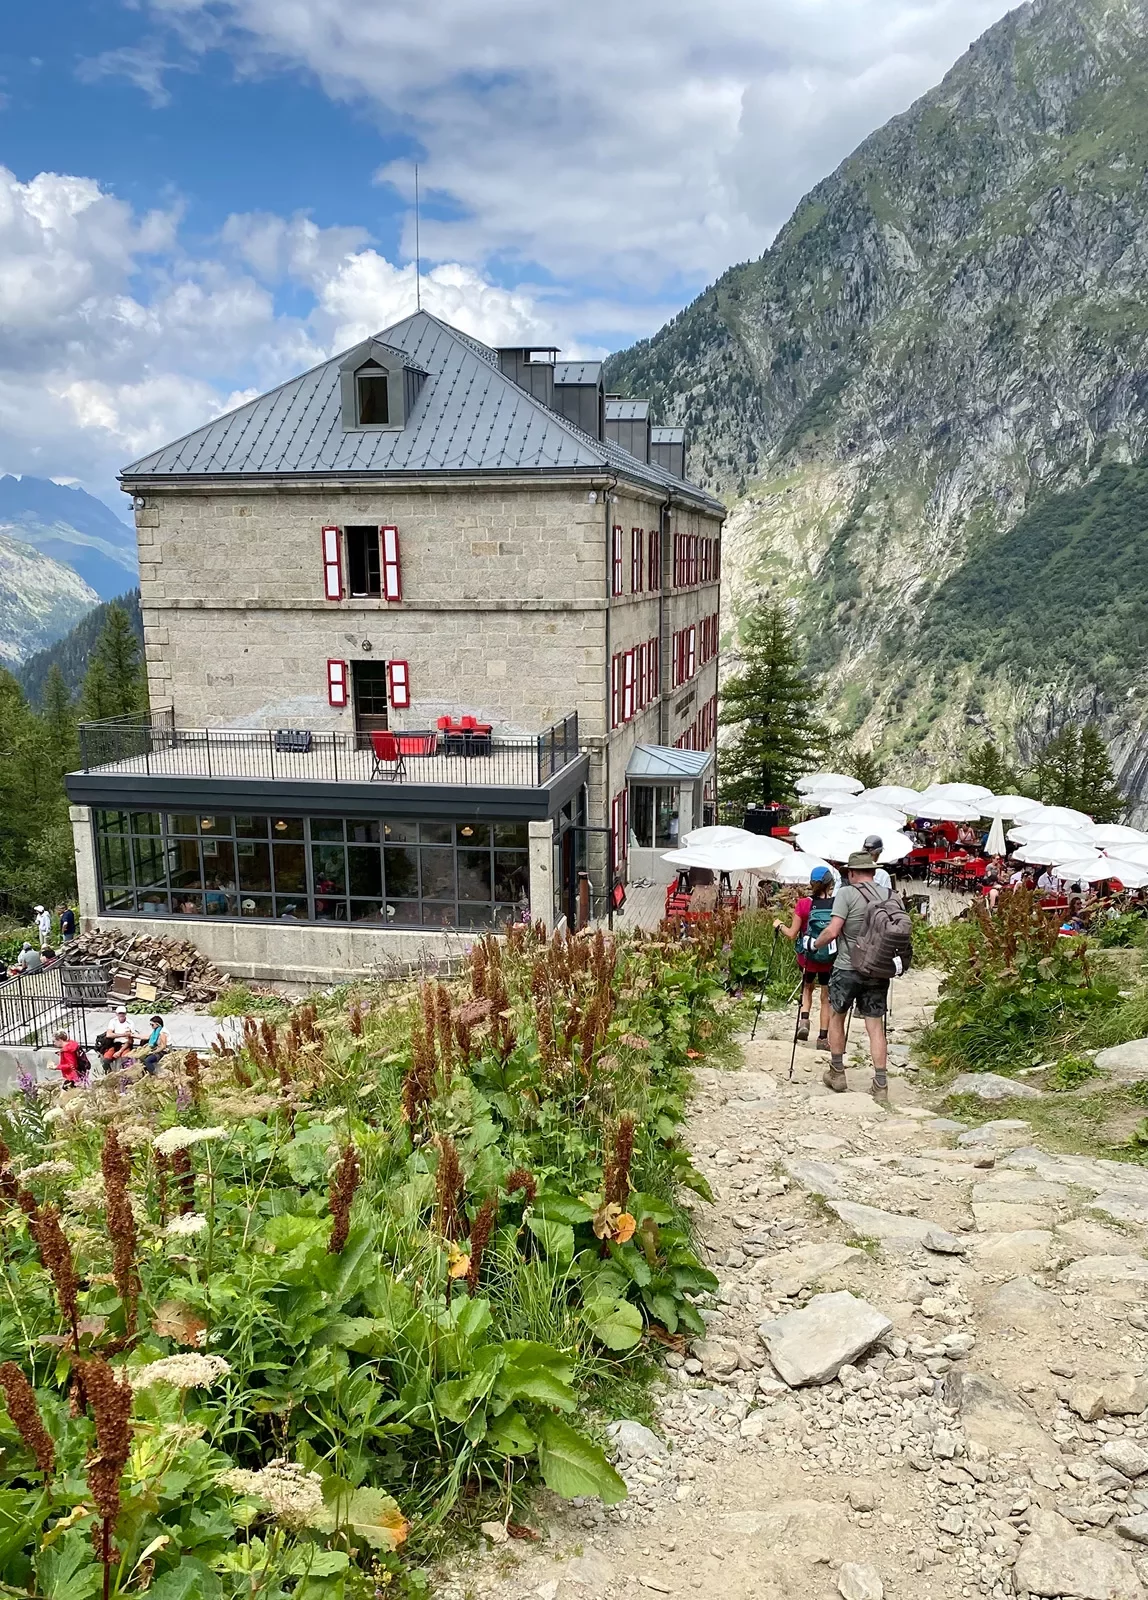 Guests walking towards clifftop restaurant/café. Rocky hillside in background.